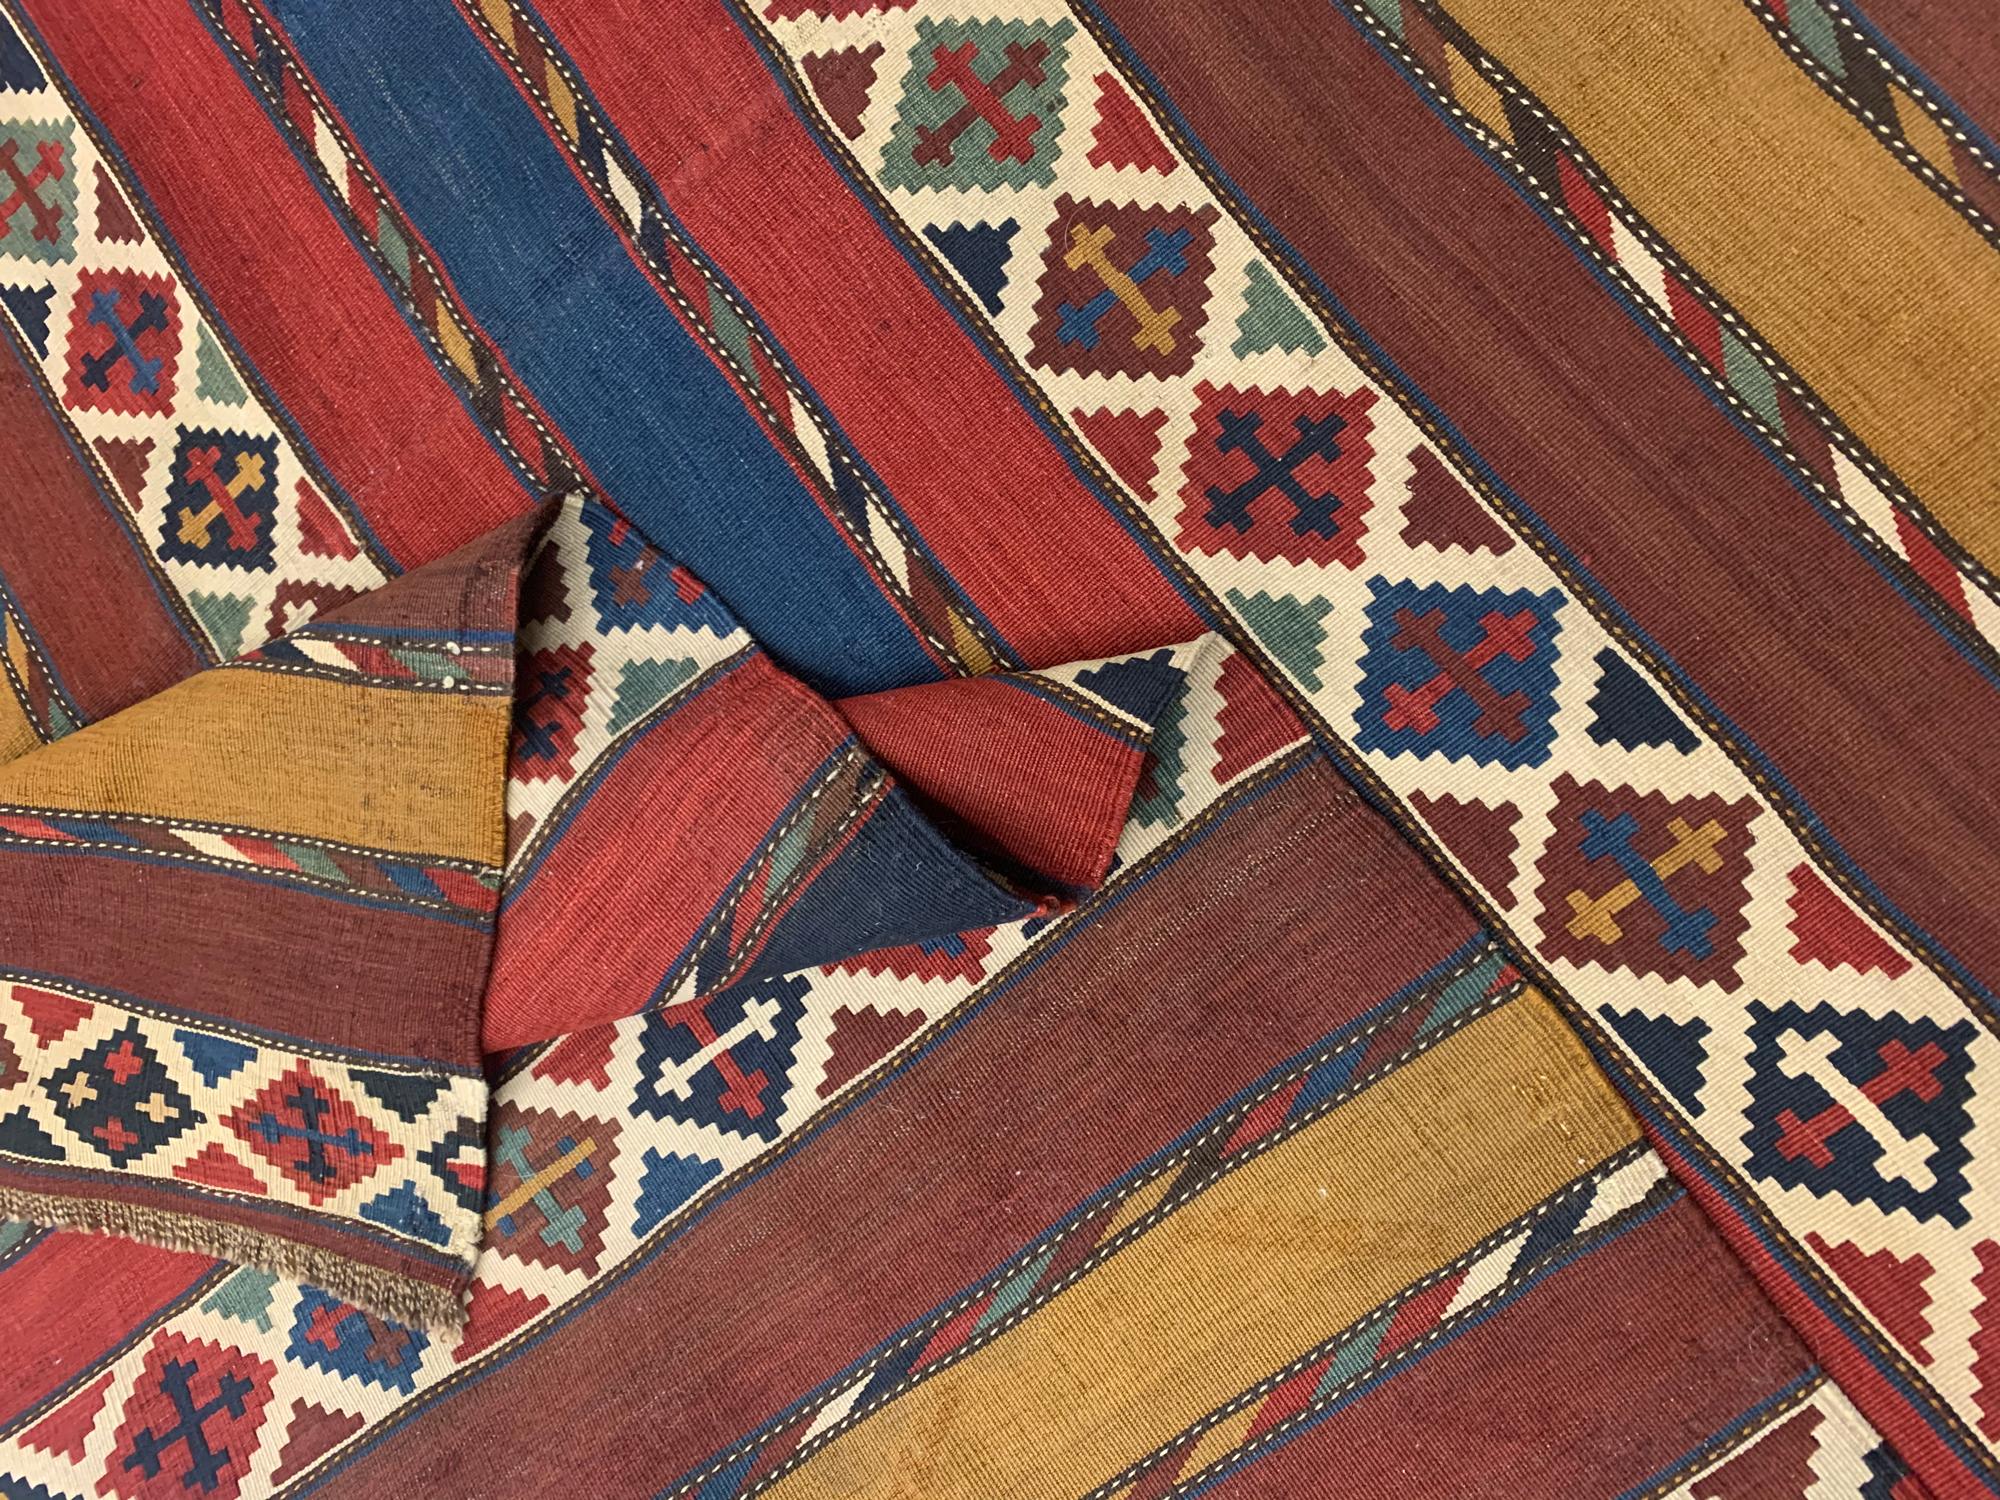 Cotton Rare Antique Caucasian Kilim Rug, Striped Kilim Traditional Wool Carpet